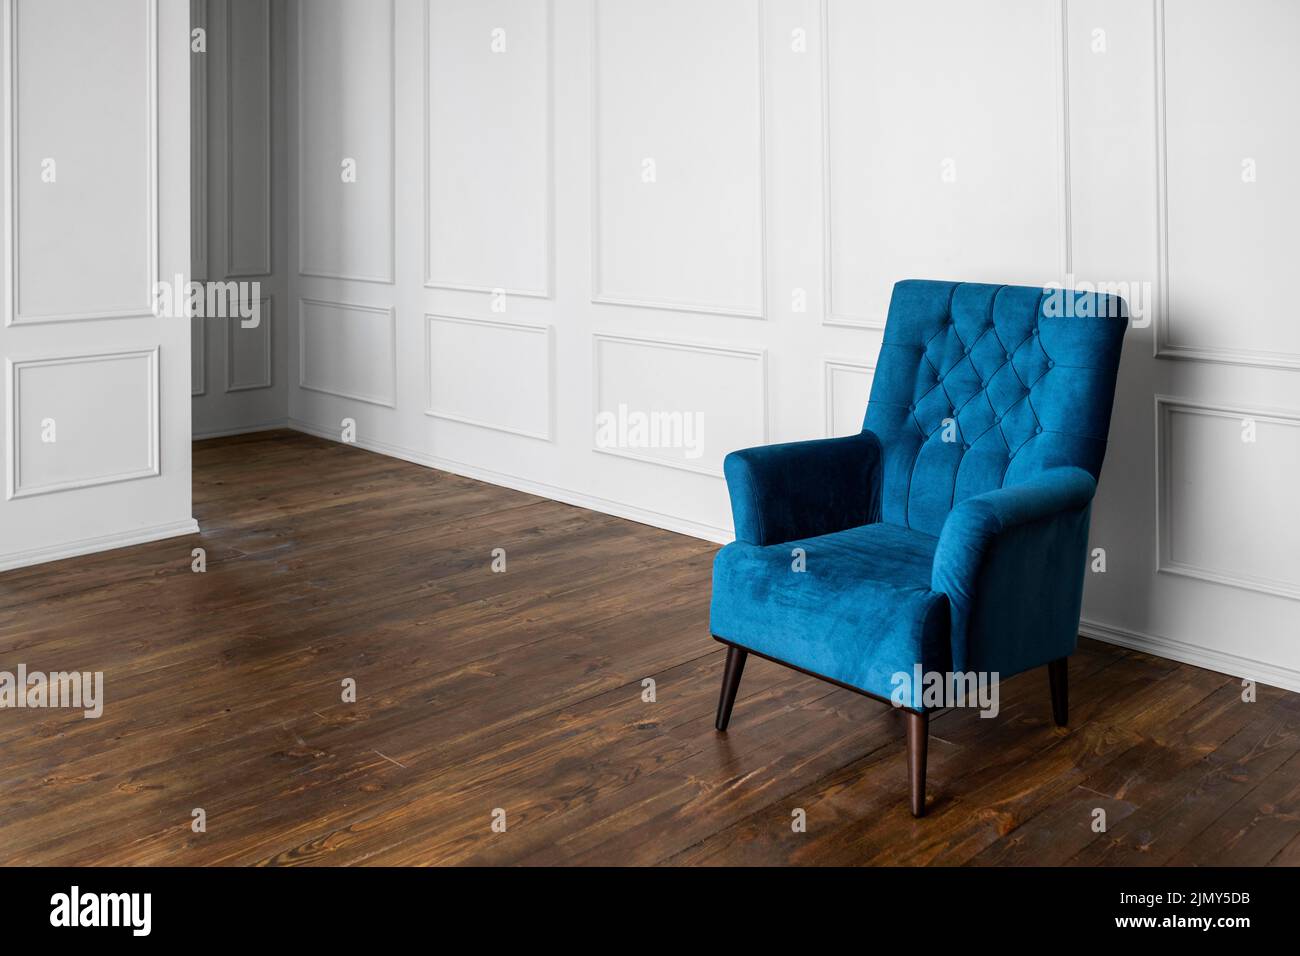 Home indoor design concept Stock Photo